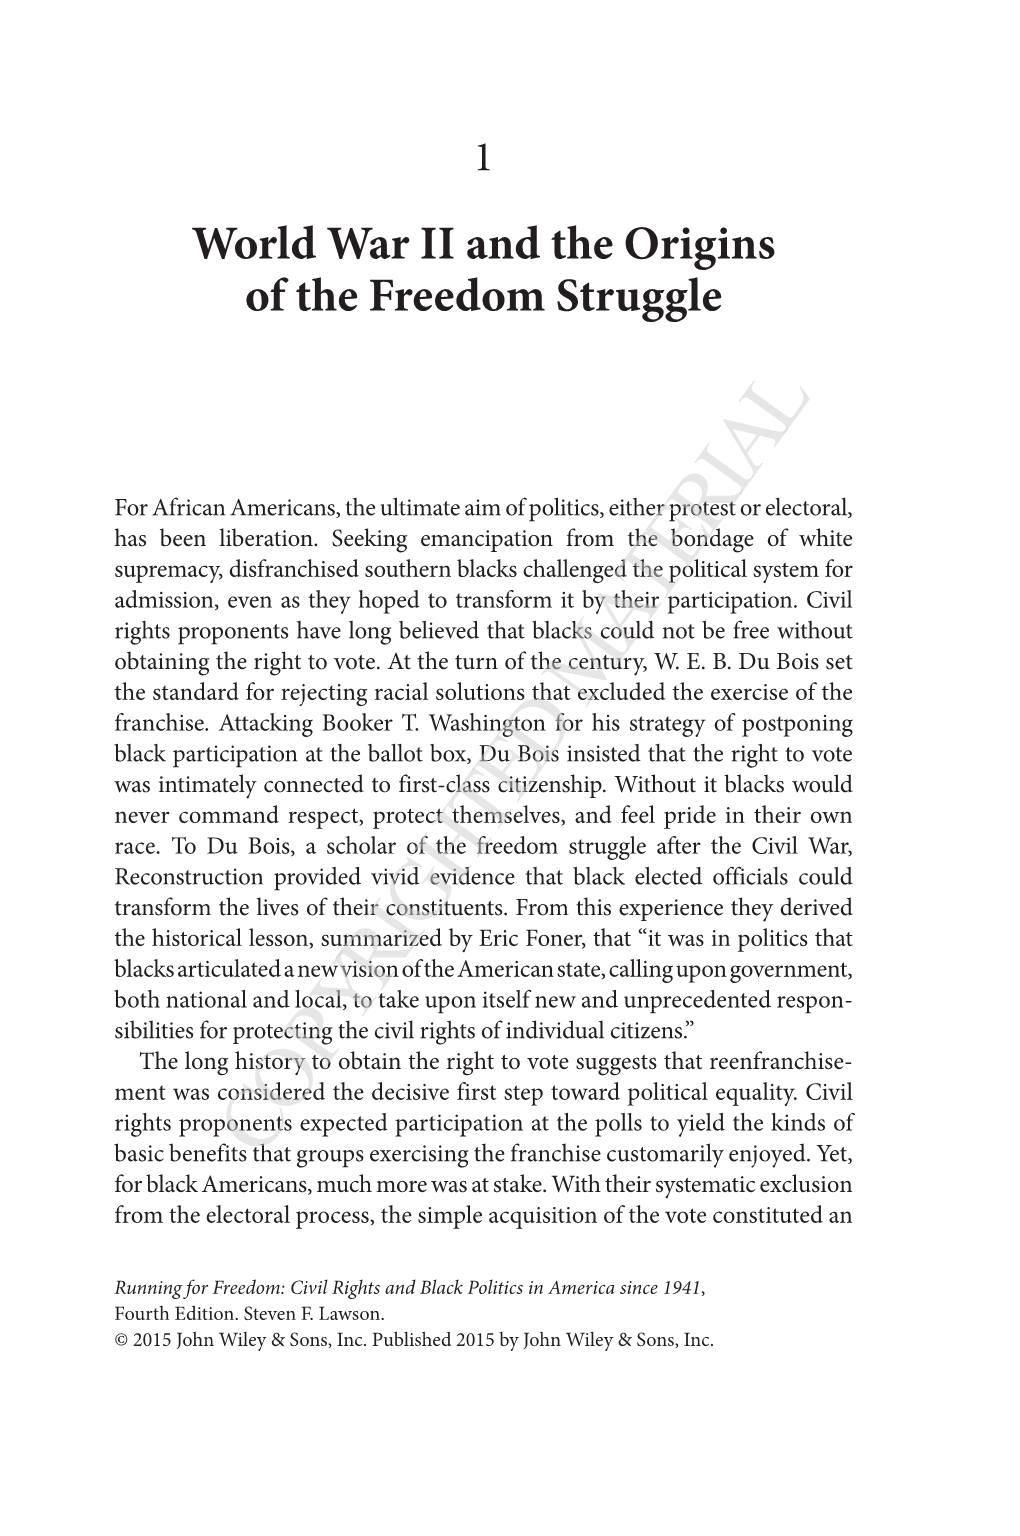 World War II and the Origins of the Freedom Struggle